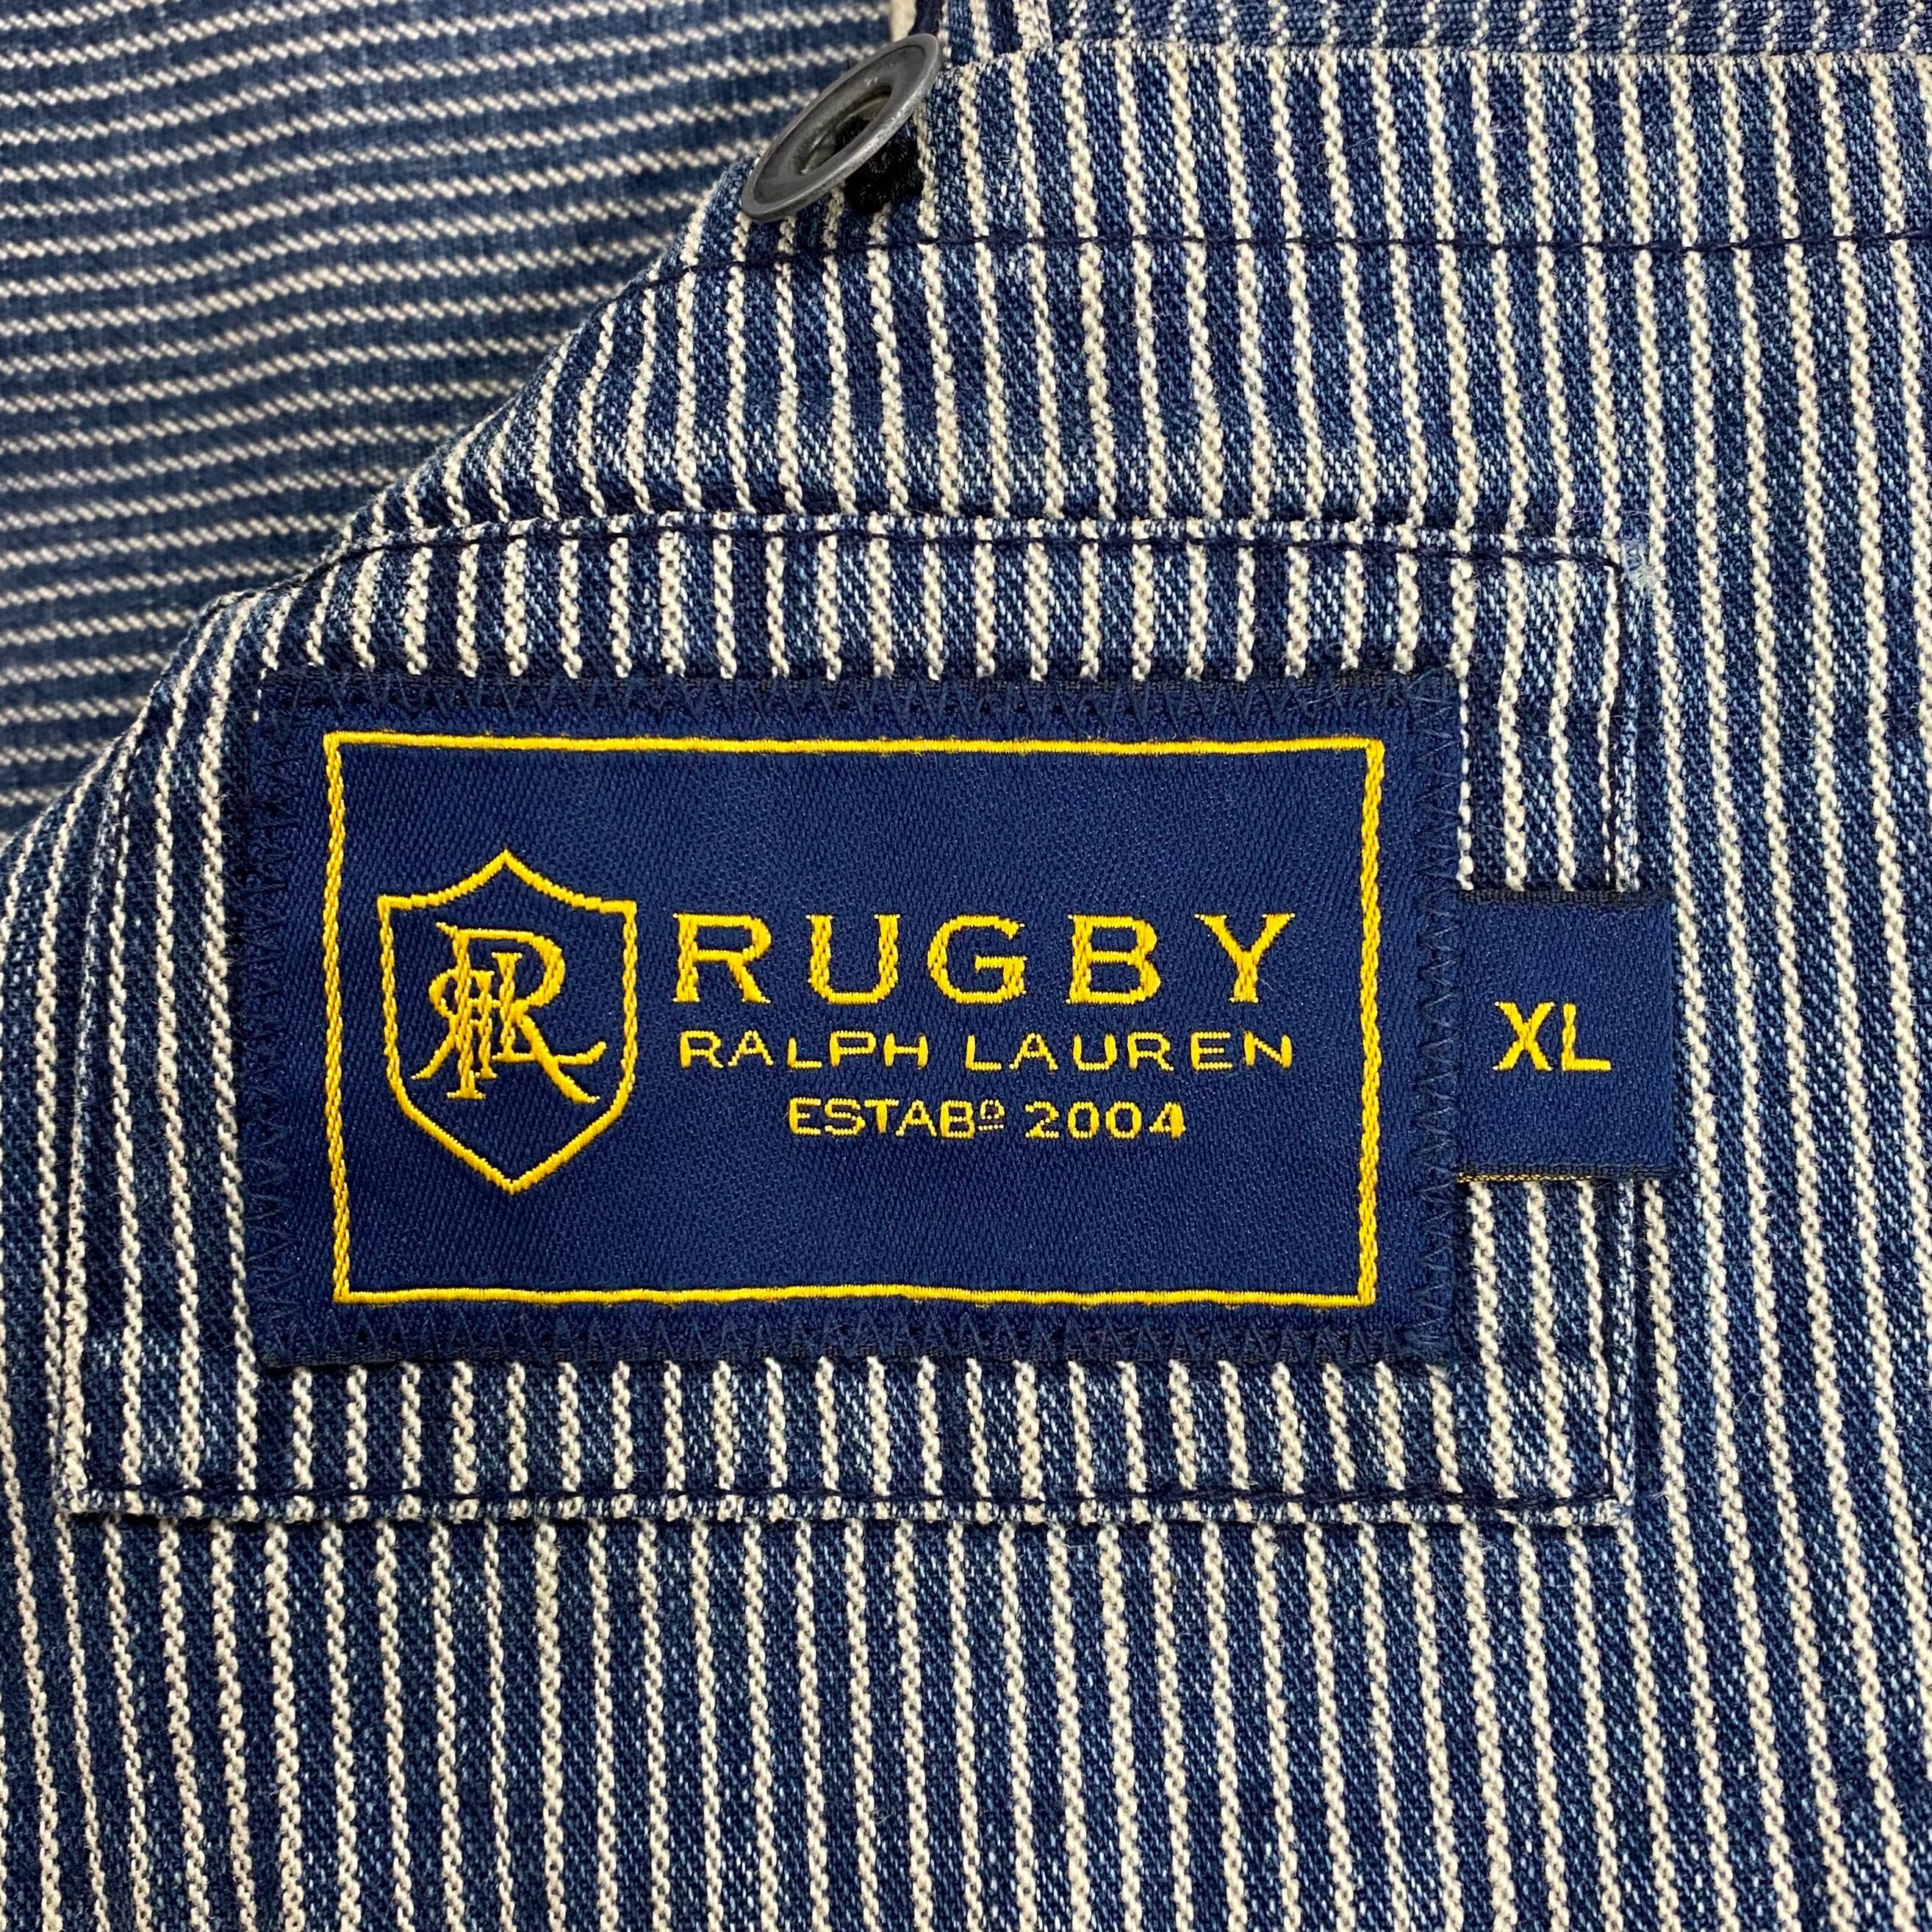 RUGBY "Ralph Lauren" Hickory Stripe Jacket / ラグビー ラルフ